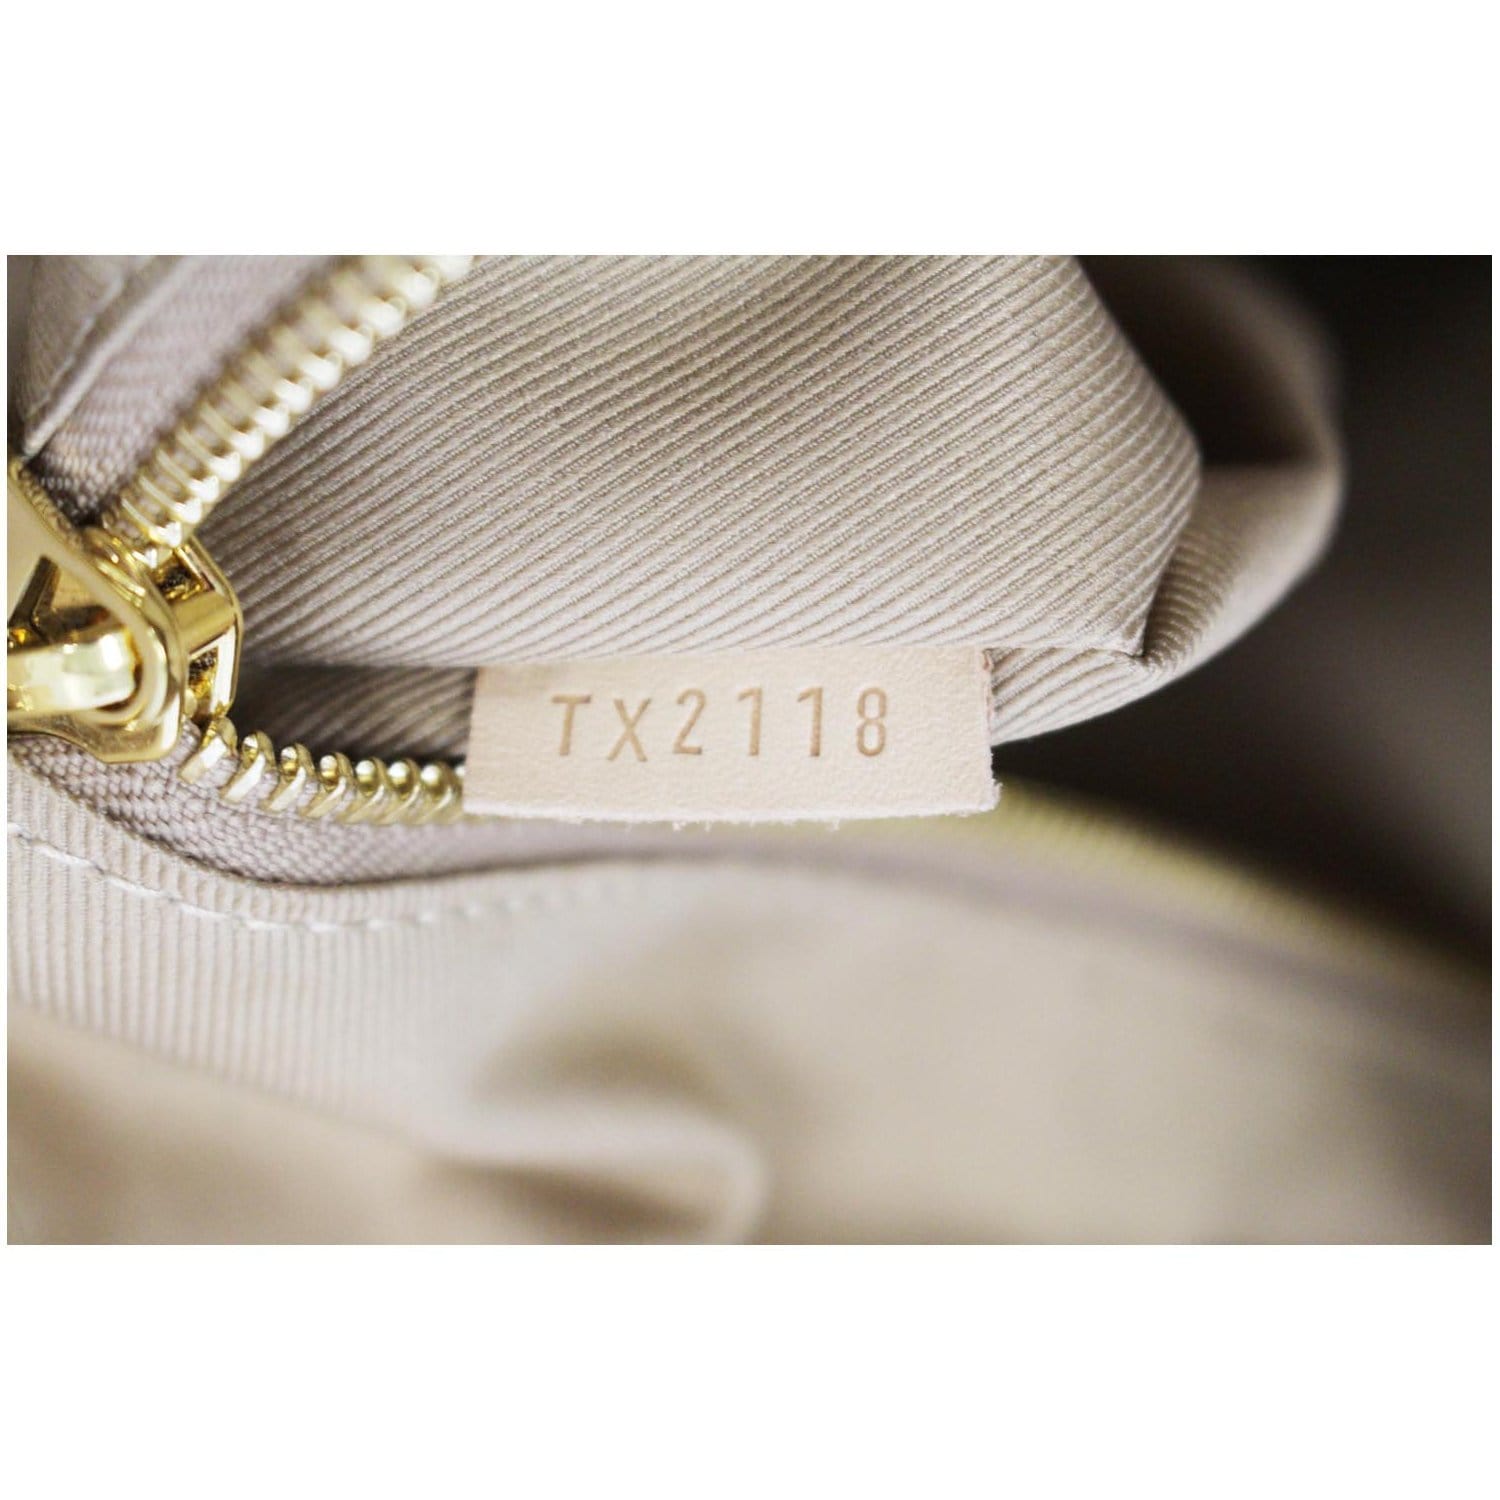 Louis Vuitton Ebene Monogram Coated Canvas Graceful mm Gold Hardware, 2021-2022 (Like New), Womens Handbag